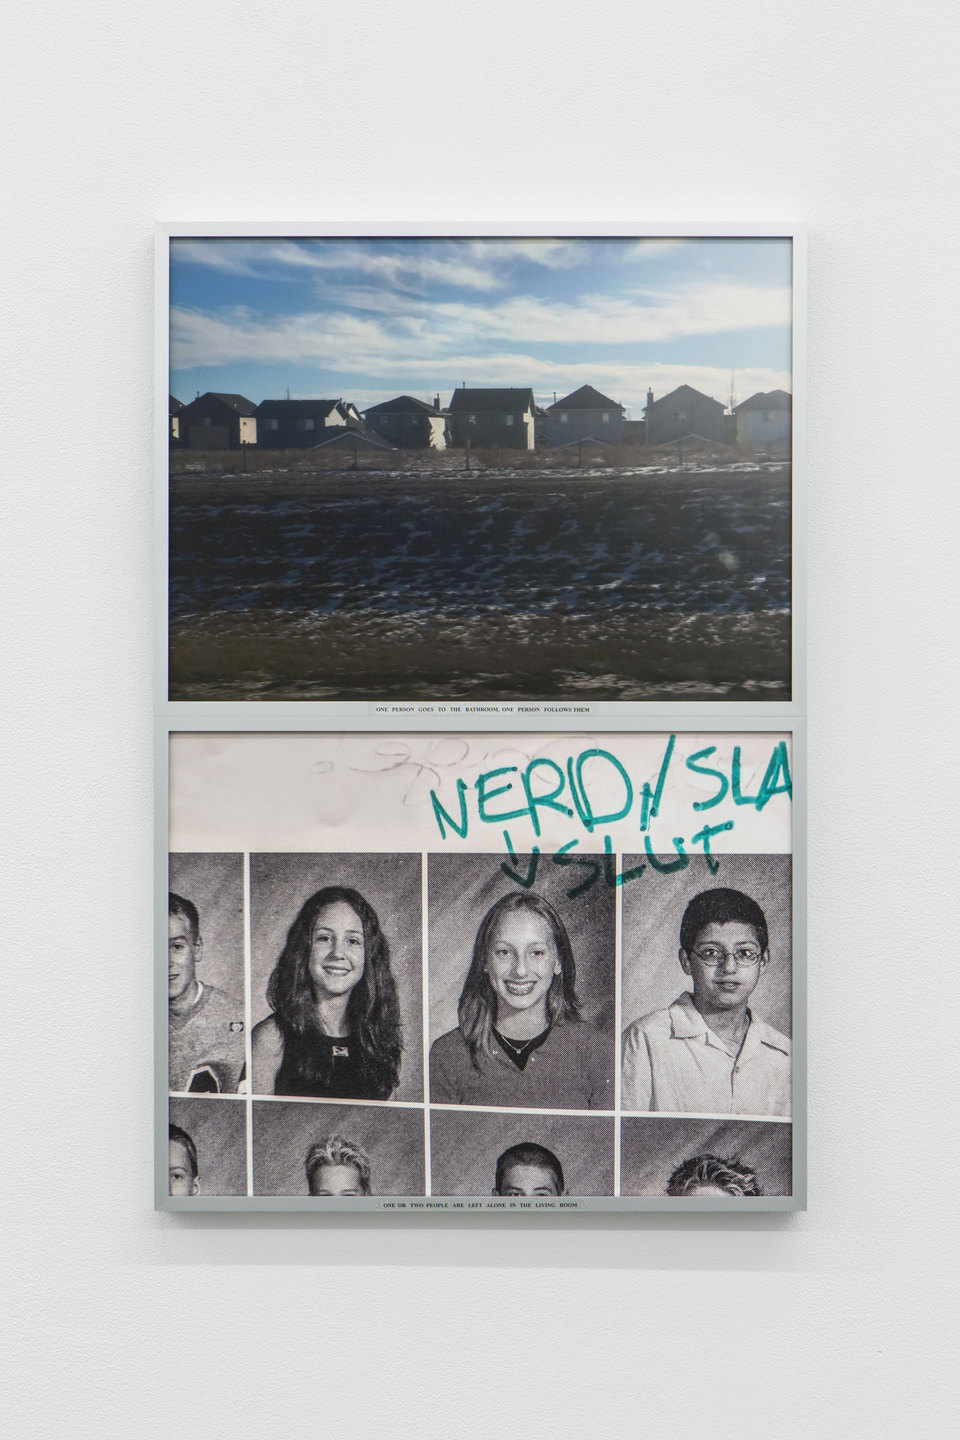 Rosa Aiello, 'Configuration', 2019, Digital print, photo rag paper, acetate film, glue, upholstery fabric, aluminium frames 62.4 x 41.2cm, Cell Project Space